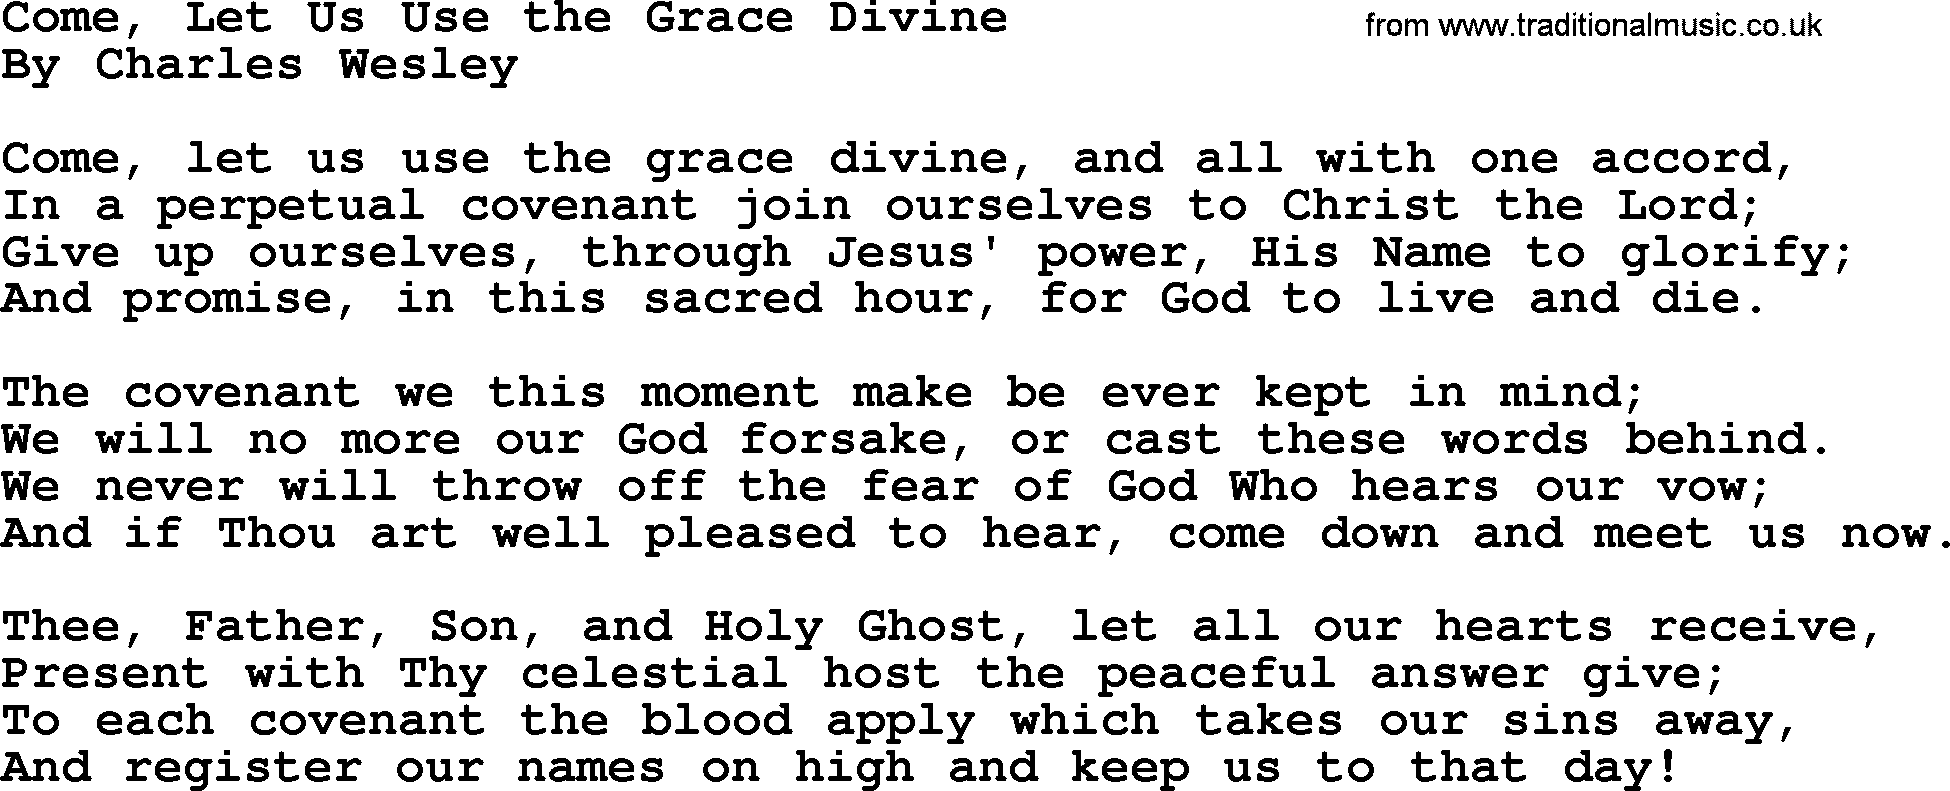 Charles Wesley hymn: Come, Let Us Use The Grace Divine, lyrics